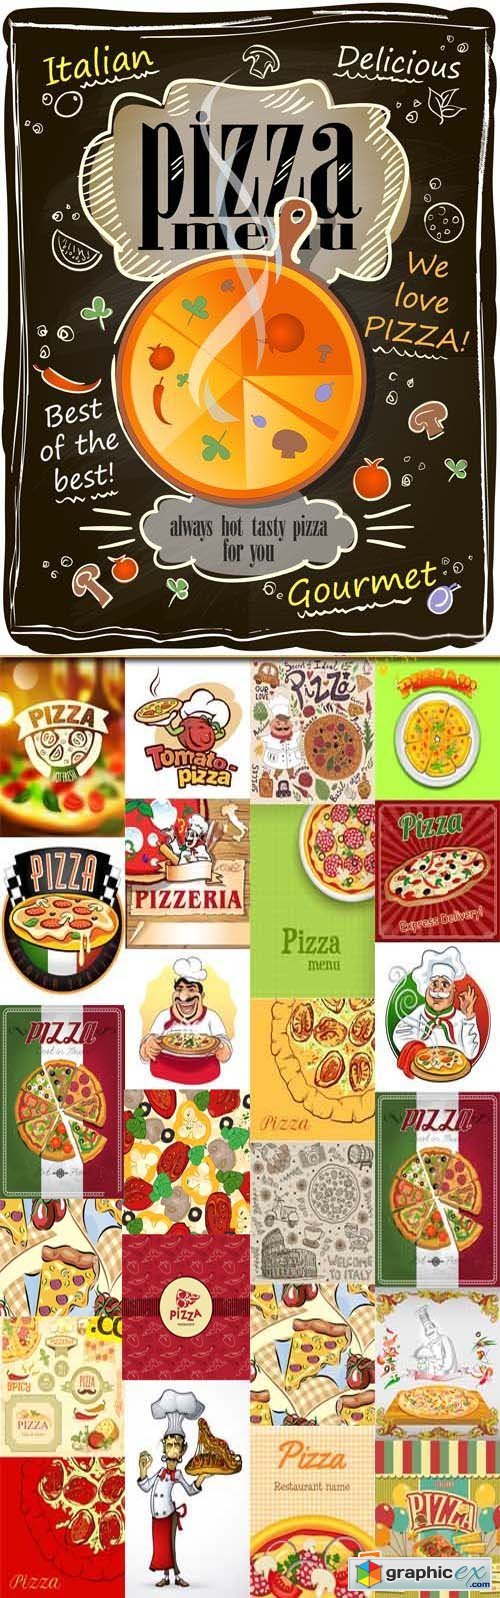 Pizza illustration and menu design, 25xEPS